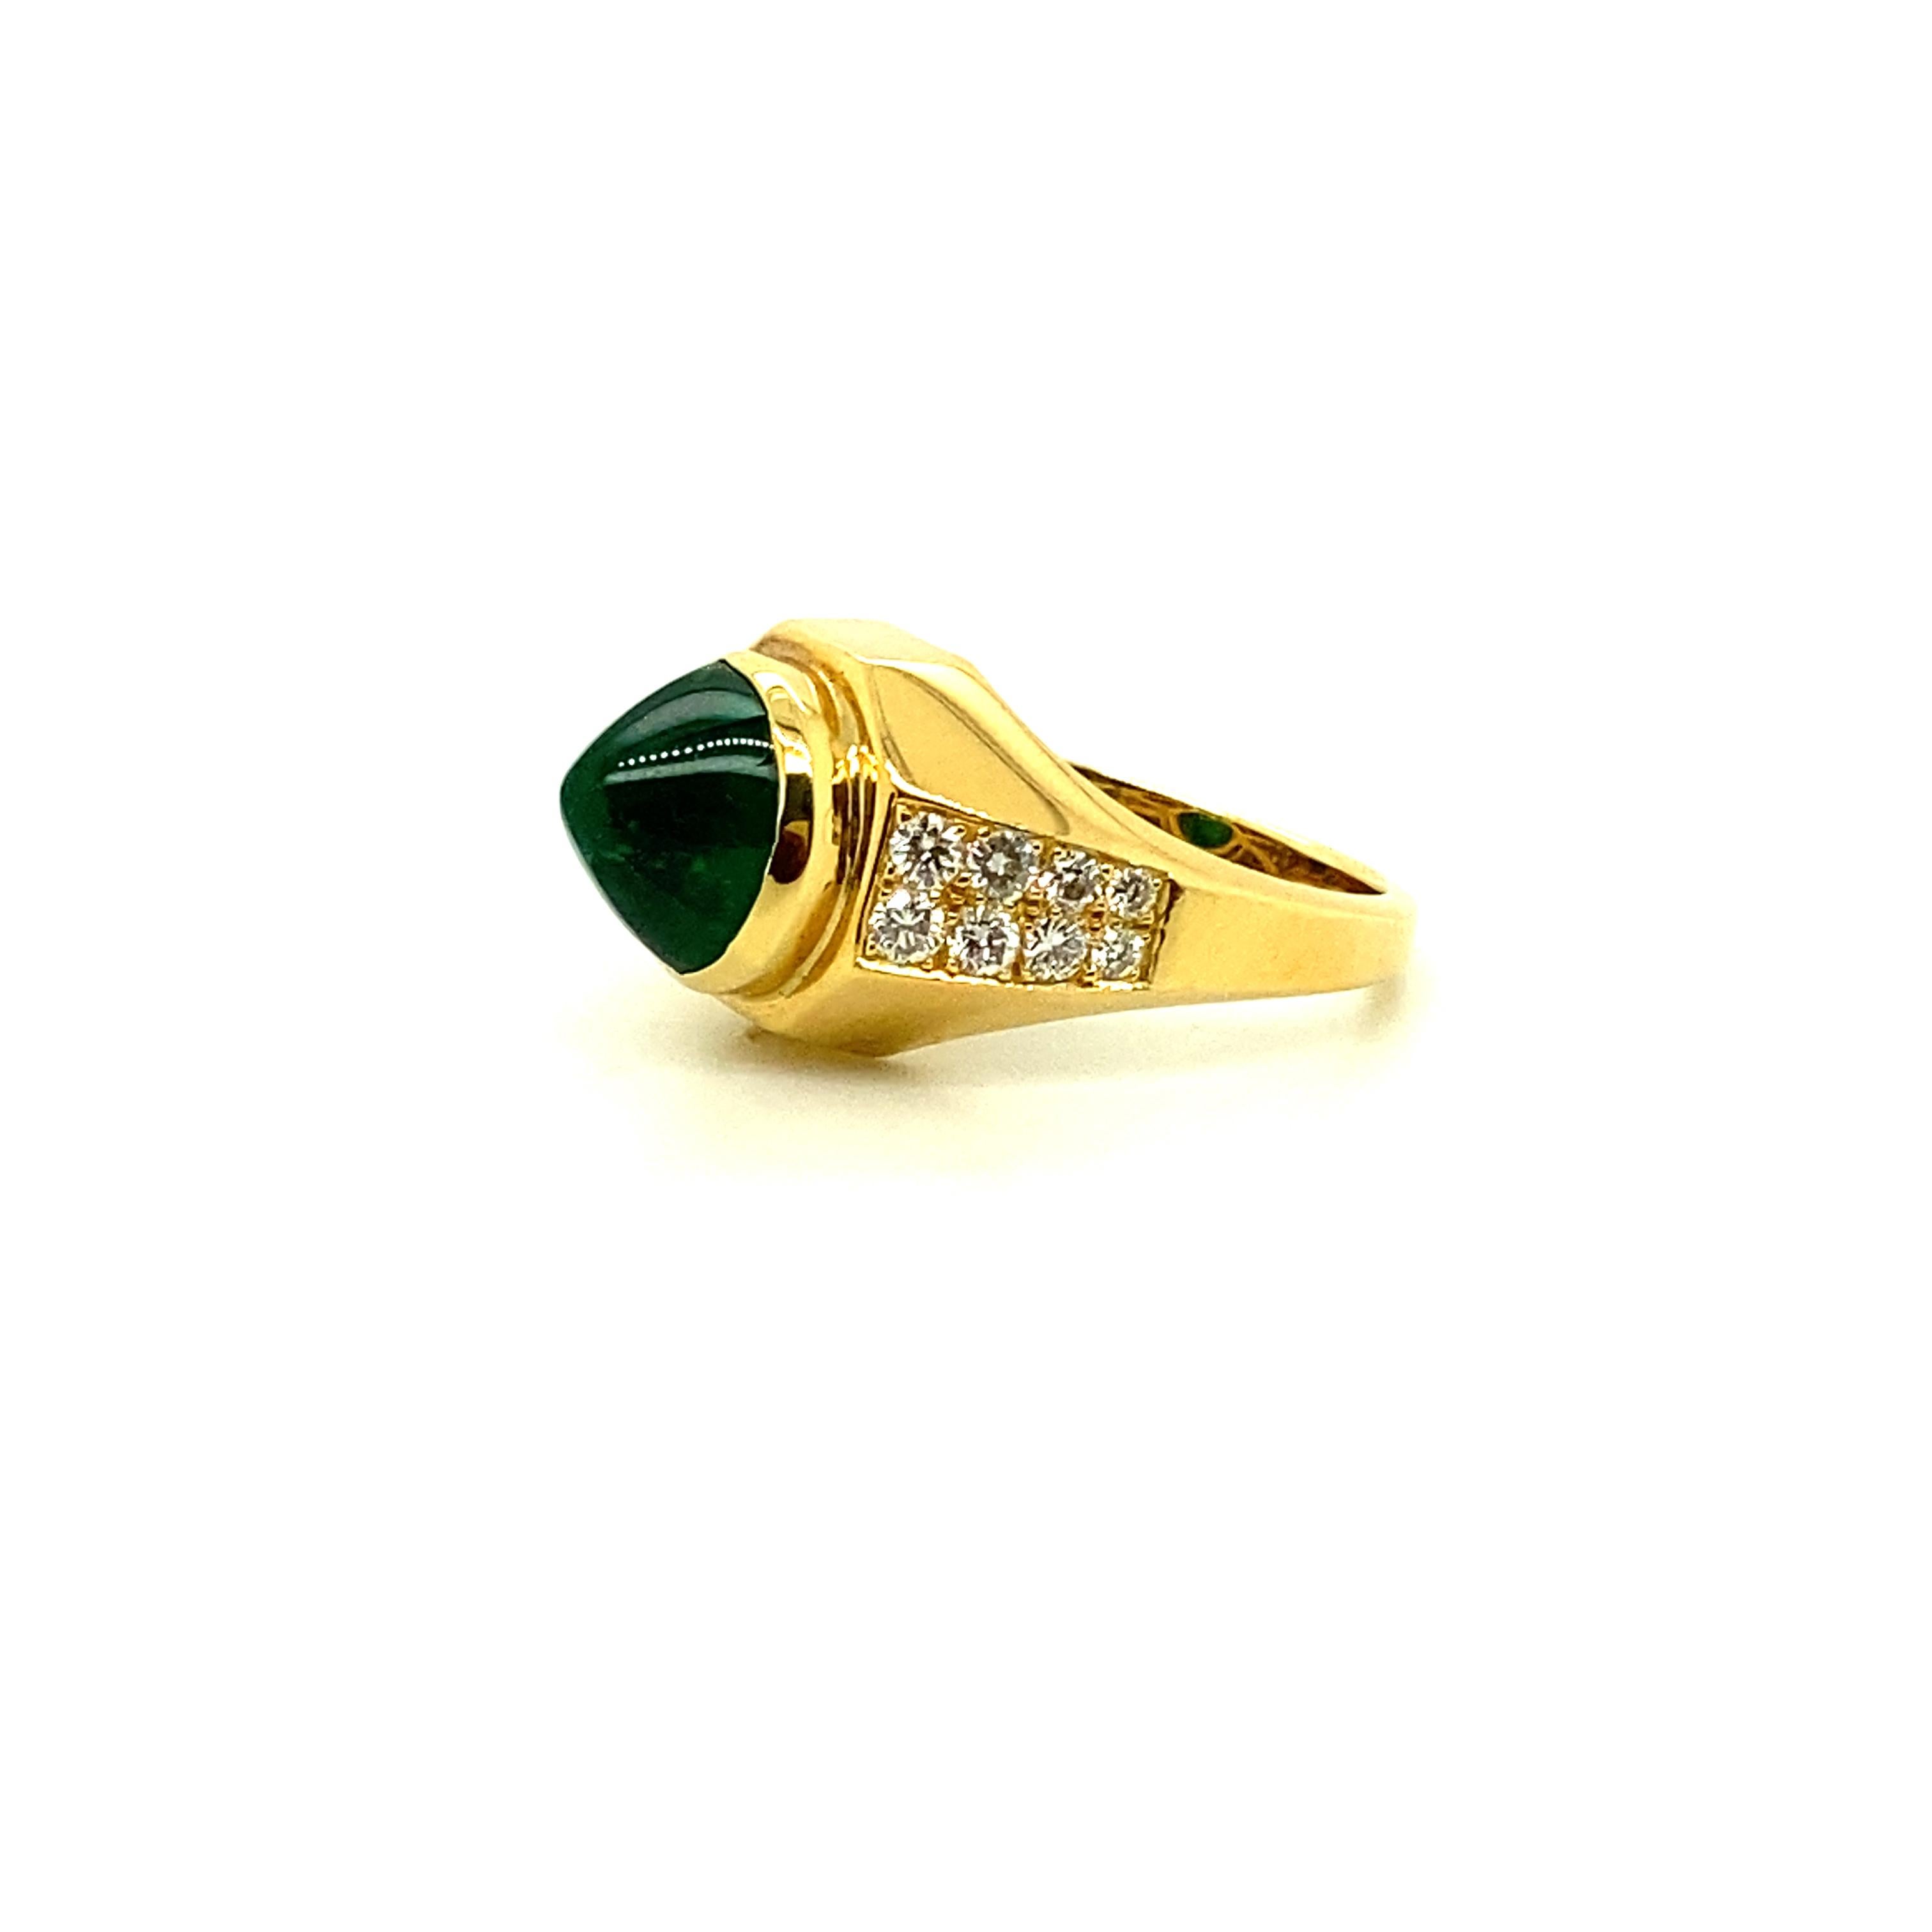 Sugarloaf Cabochon 1960s Bulgari GRS Certified Vivid Green Sugarloaf Emerald and White Diamond Ring